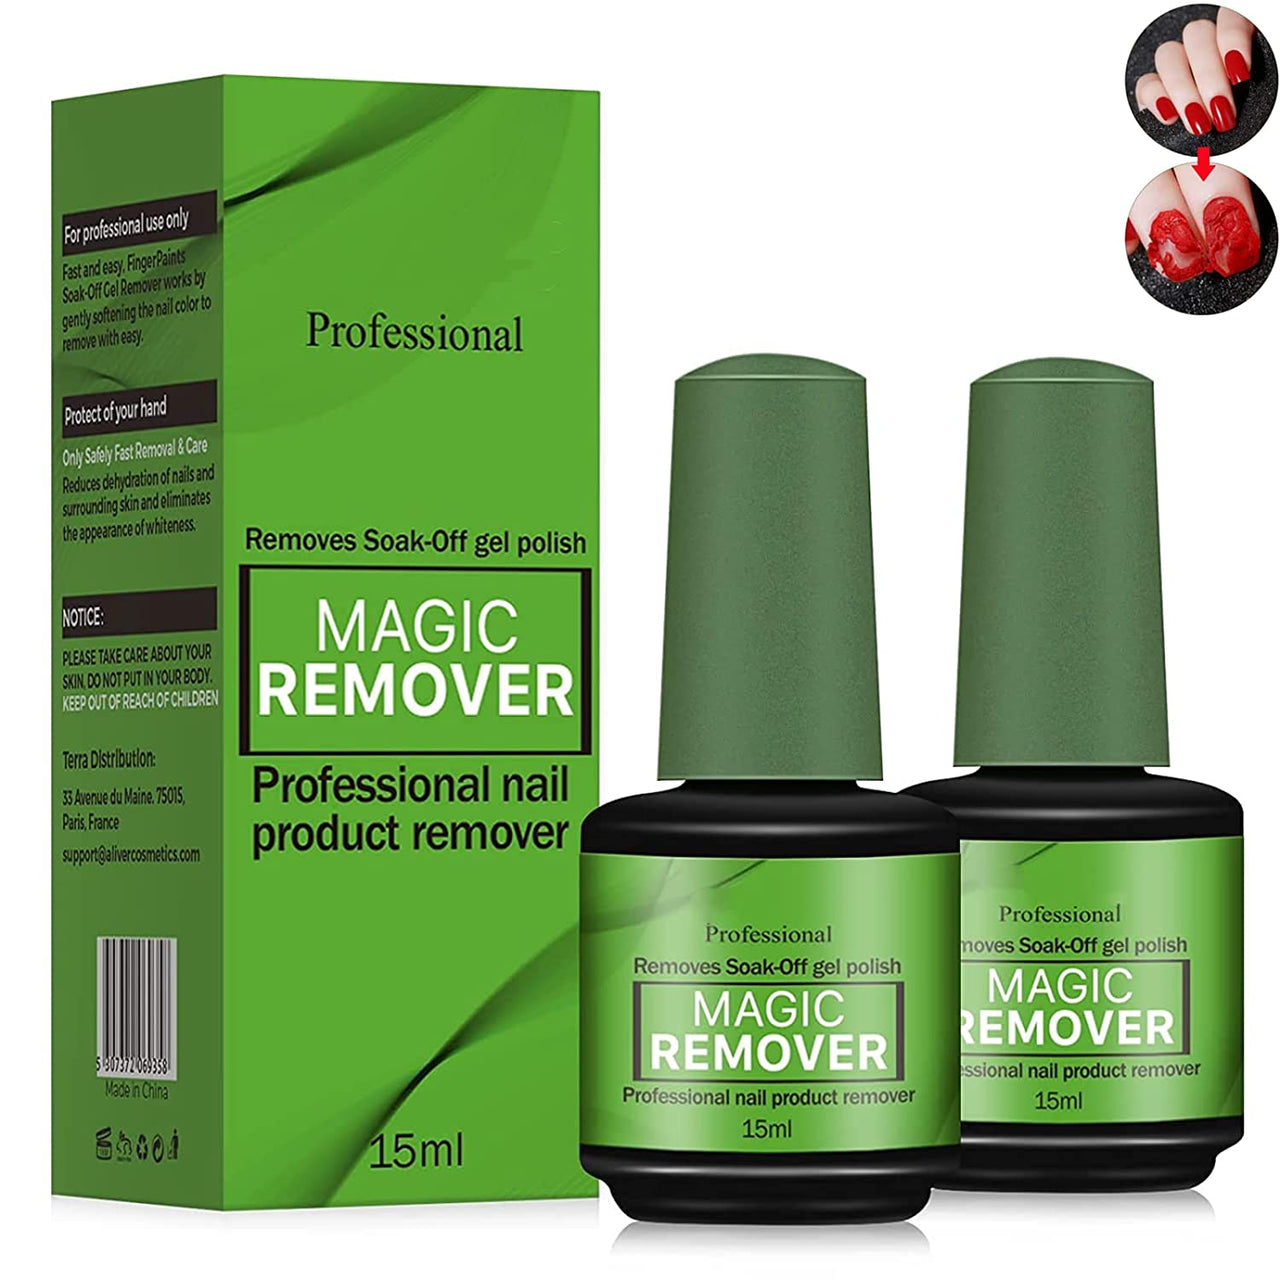 Rosalind Magic Nail Polish Remover,Professional Removes Soak-Off Gel Nail  Polish In 3-5 Minutes,Quickly & Easily,Don't Hurt Your Nails – ROSALIND